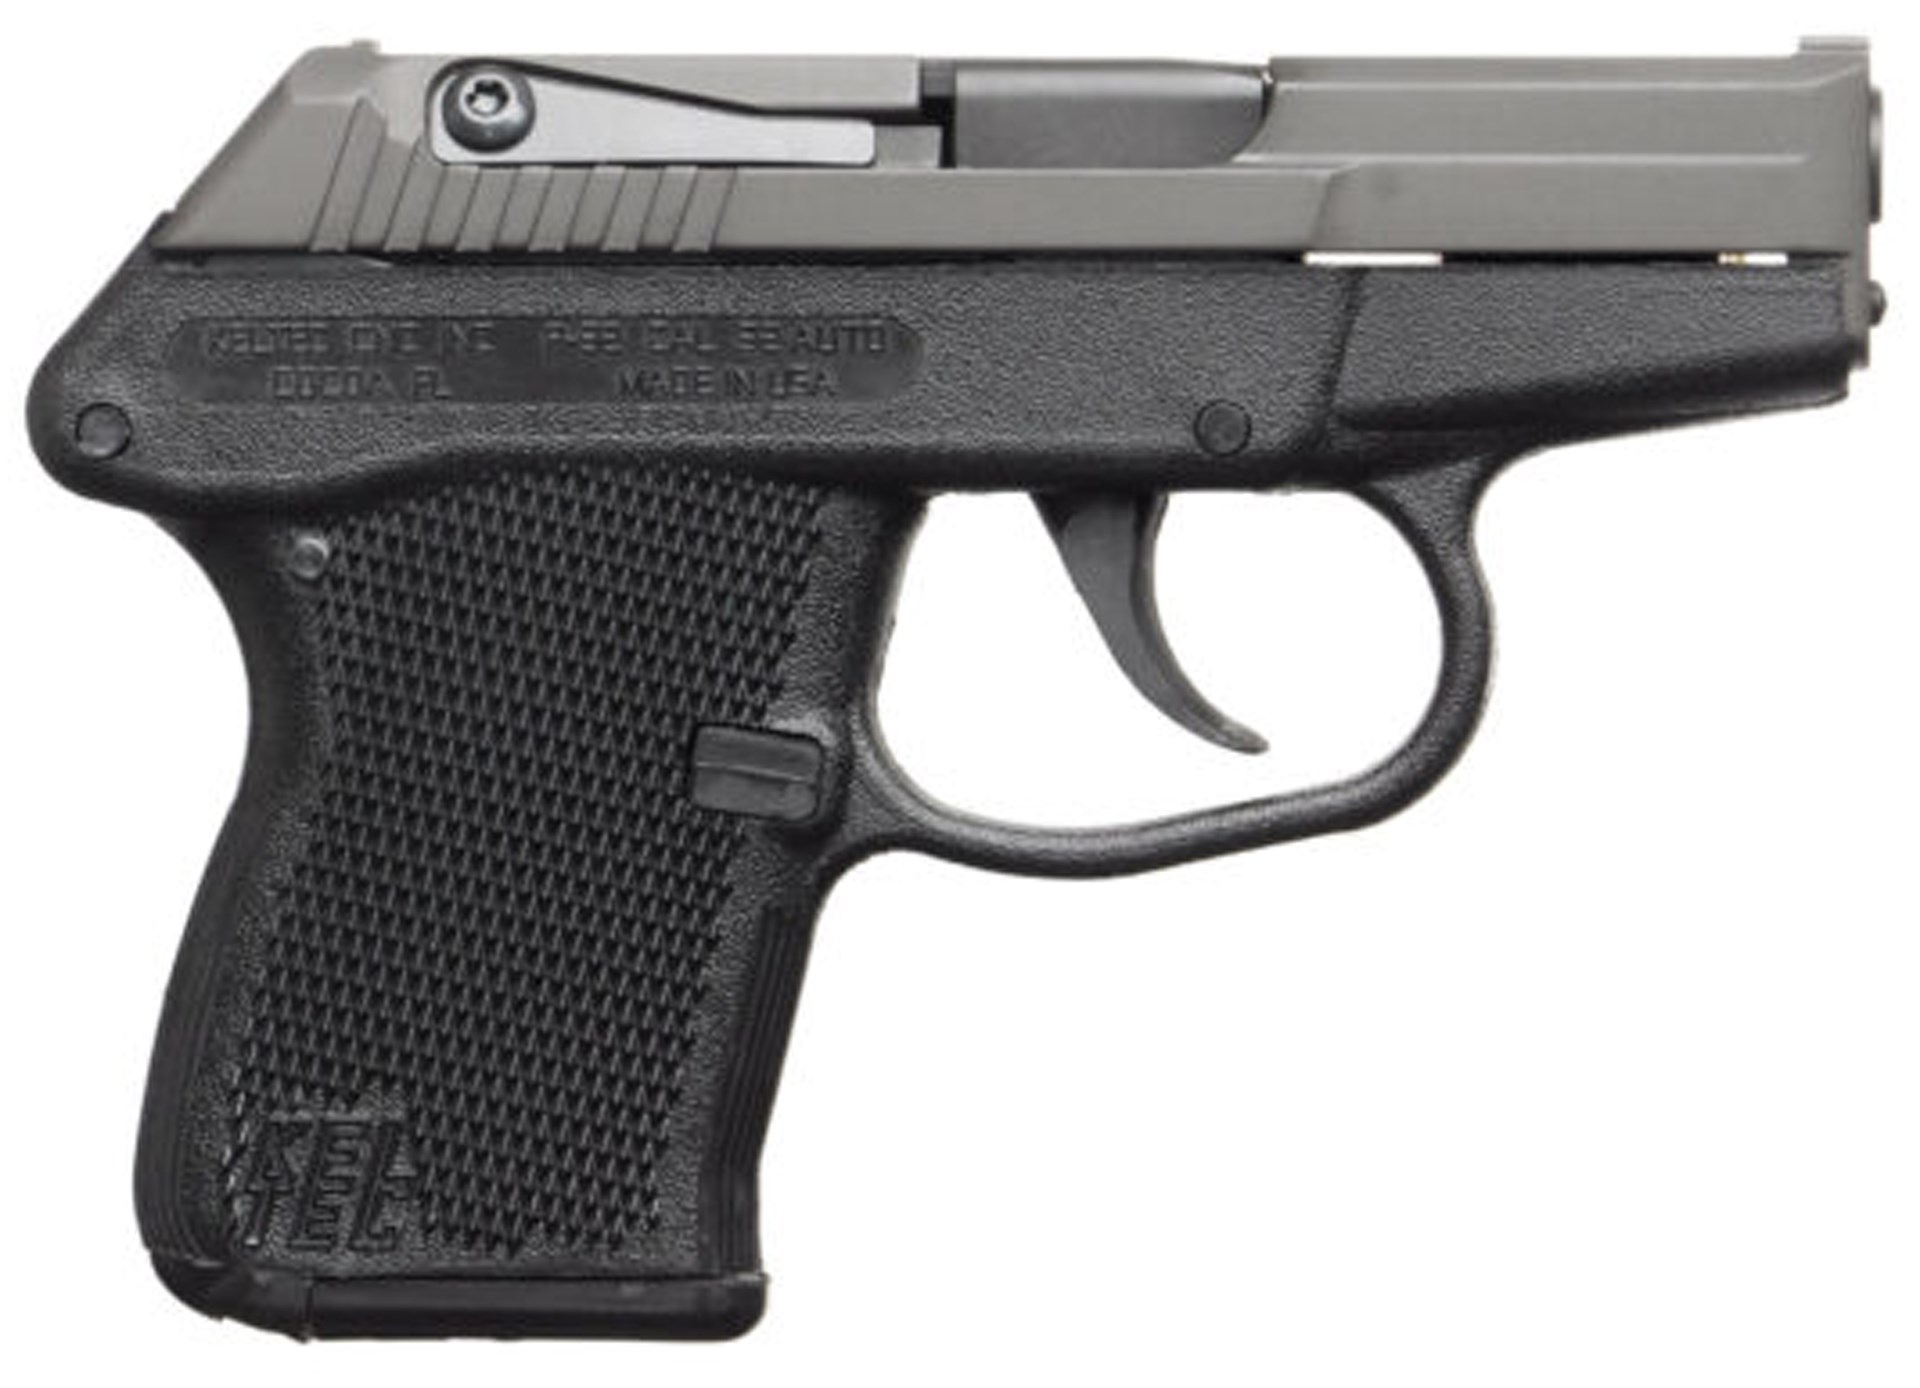 keltec p32 right-side view pistol gun handgun semi-automatic .32 ACP low-recoil defensive tool